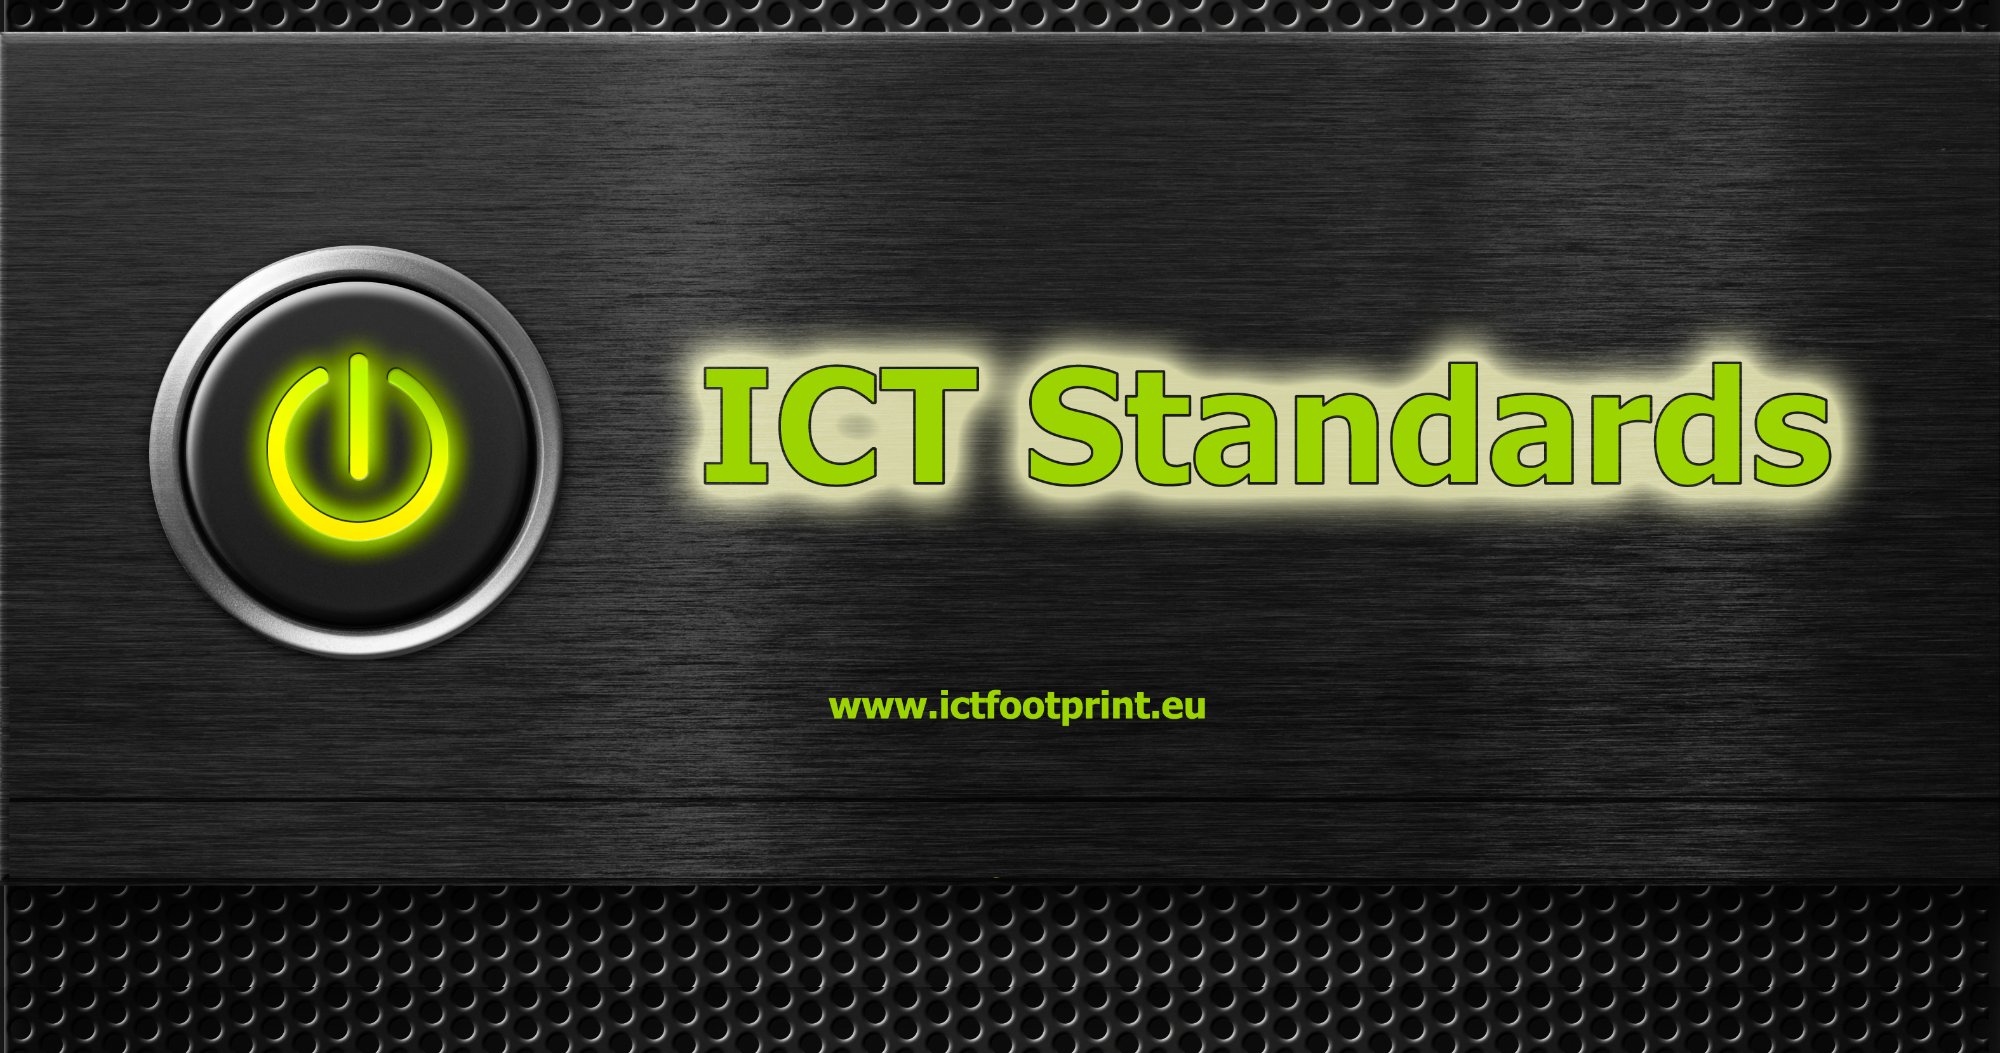 ict_standards